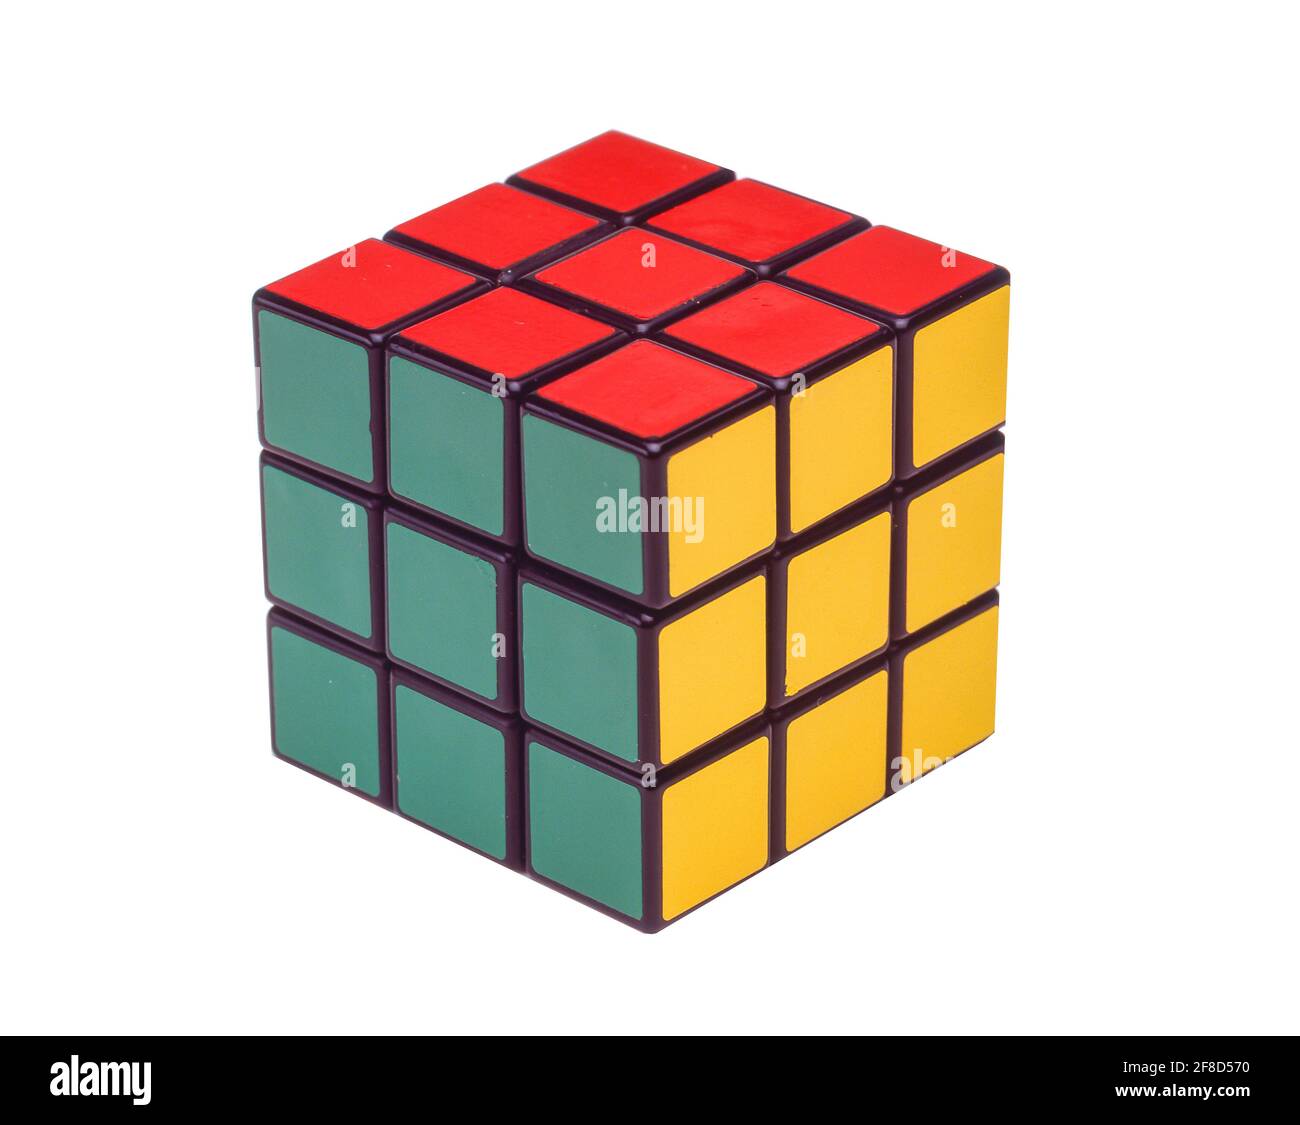 Rubik's Magic Cube against a white backgound, Greater London, England, United Kingdom Stock Photo